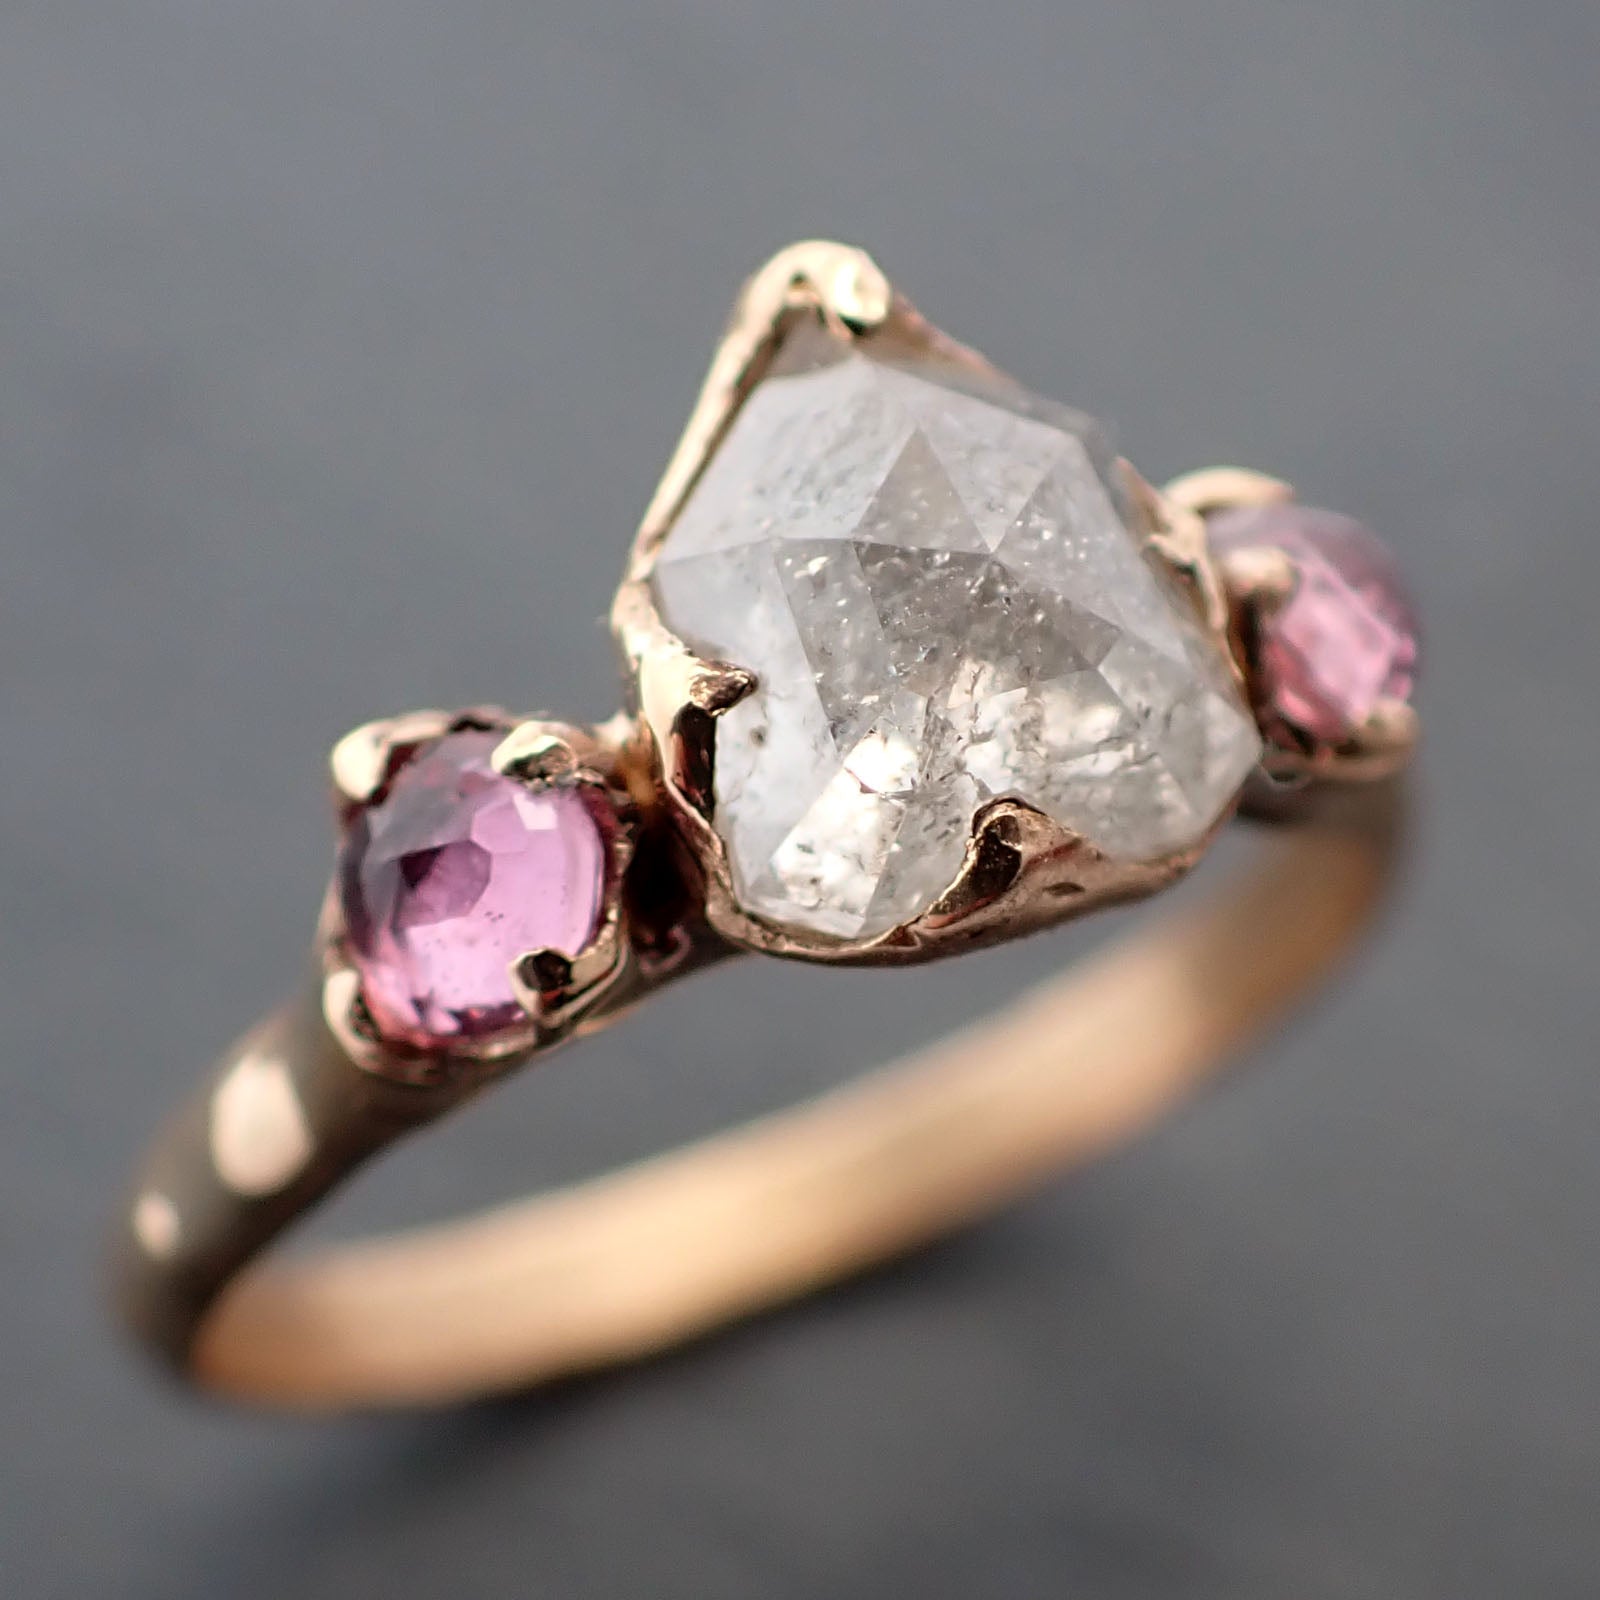 Fancy cut white Diamond and Rubies Engagement multi stone 18k yellow Gold Wedding Ring Rough Diamond Ring byAngeline 3345